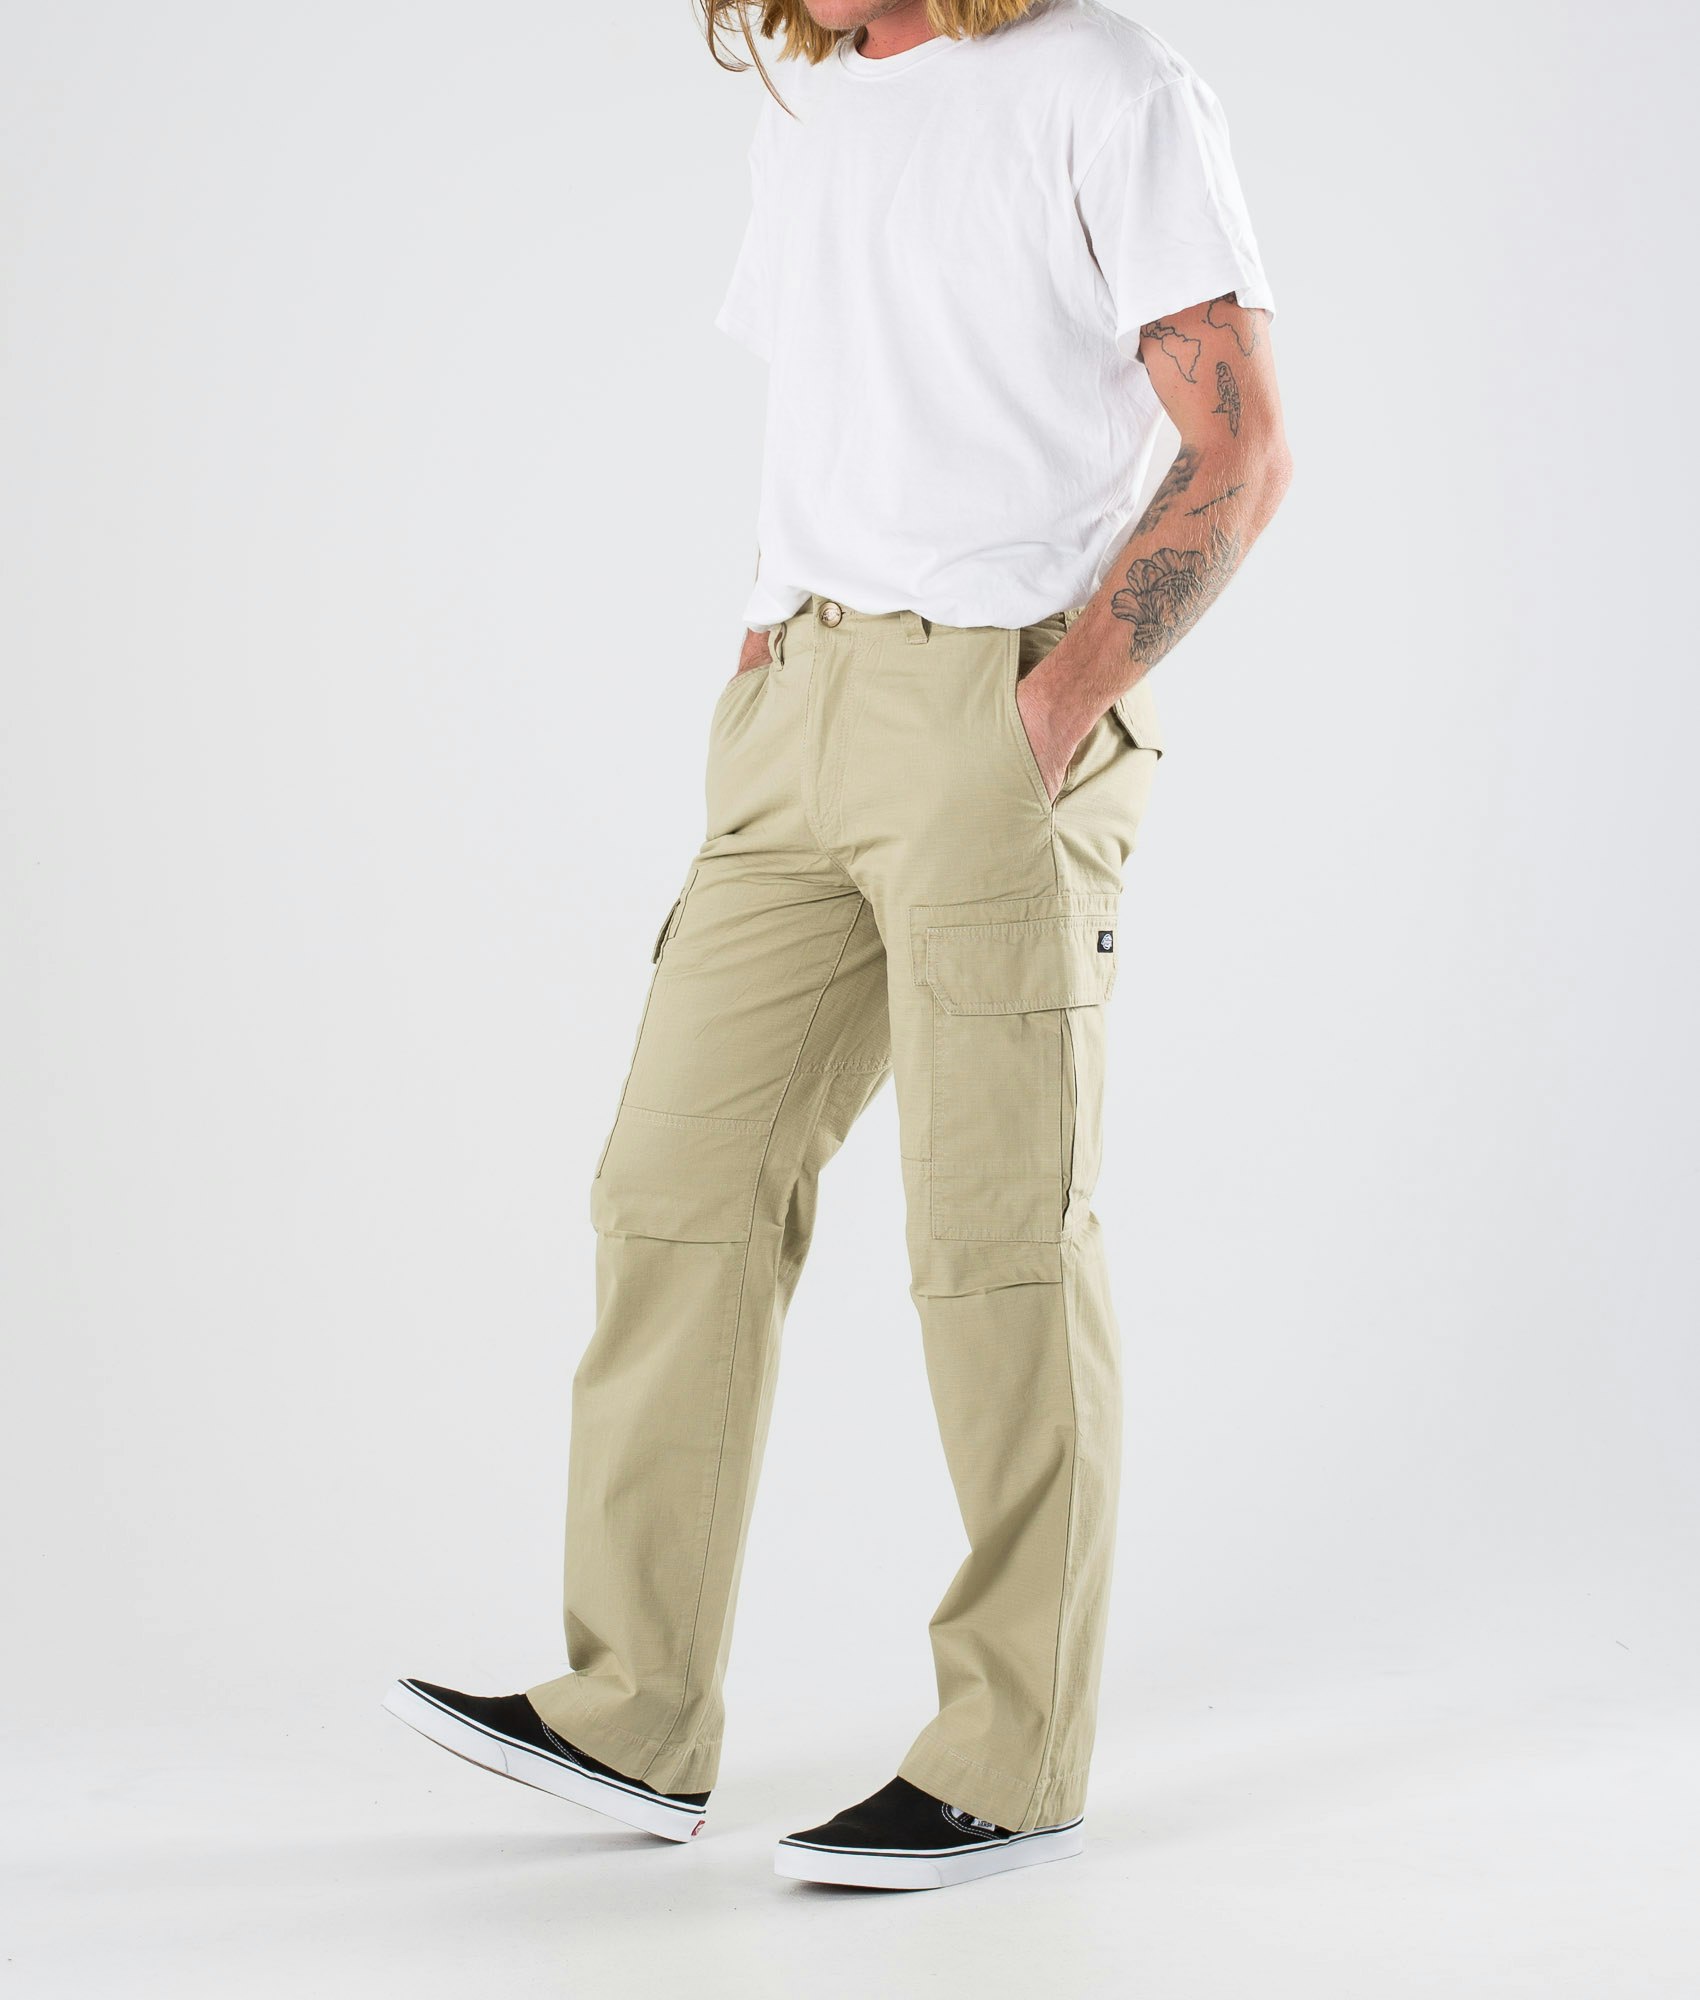 Dickies-New york ripstop robuste pantalon cargo kaki hommes Loisirs Combat pantalon